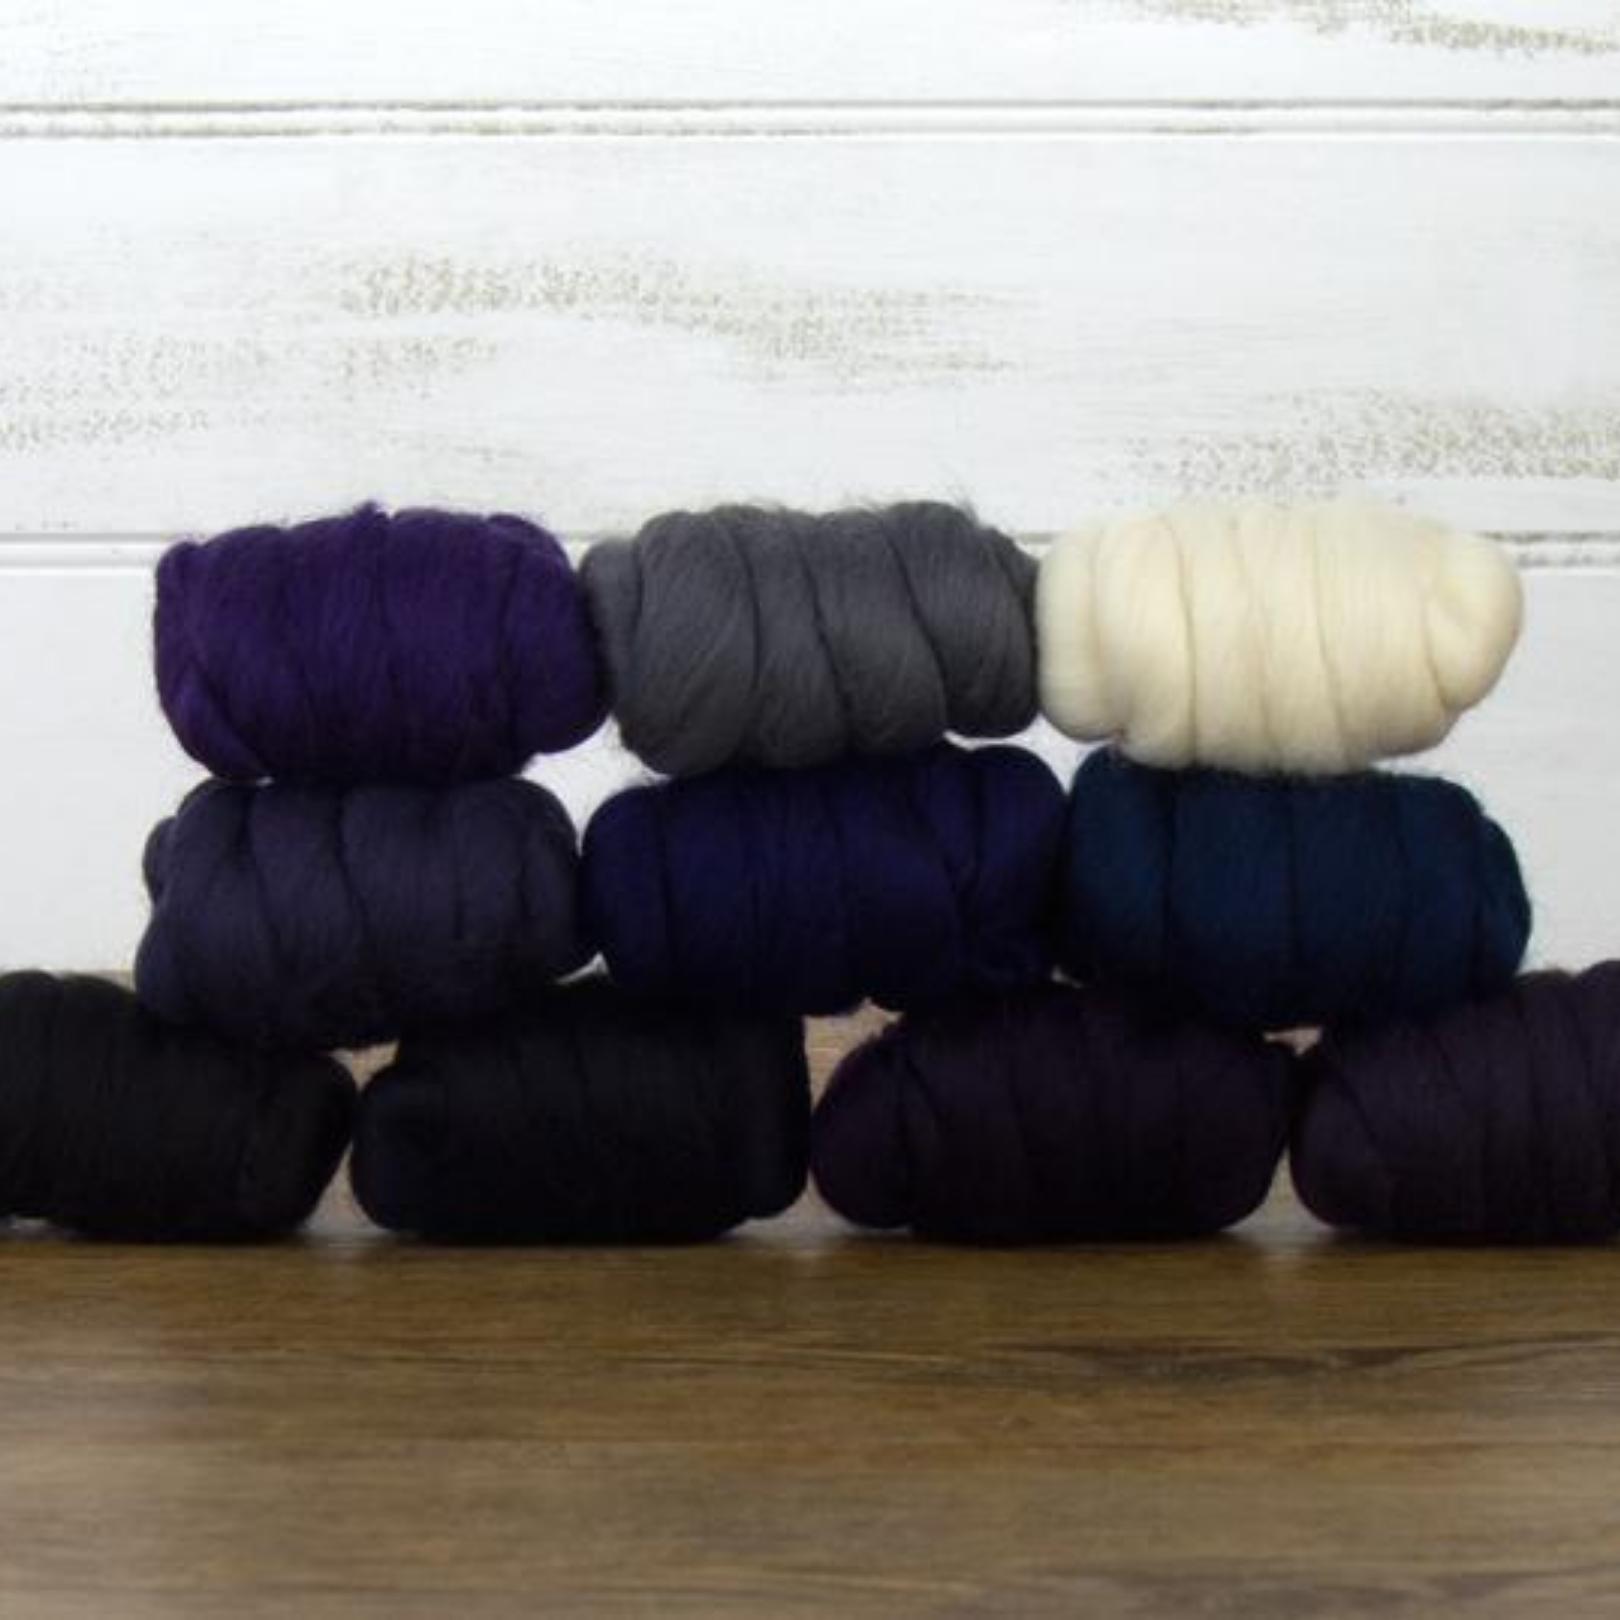 Mixed Merino Wool Variety Pack | Curious Cosmos (Multicolored) 250 Grams, 23 Micron-Wool Roving-Revolution Fibers-Revolution Fibers